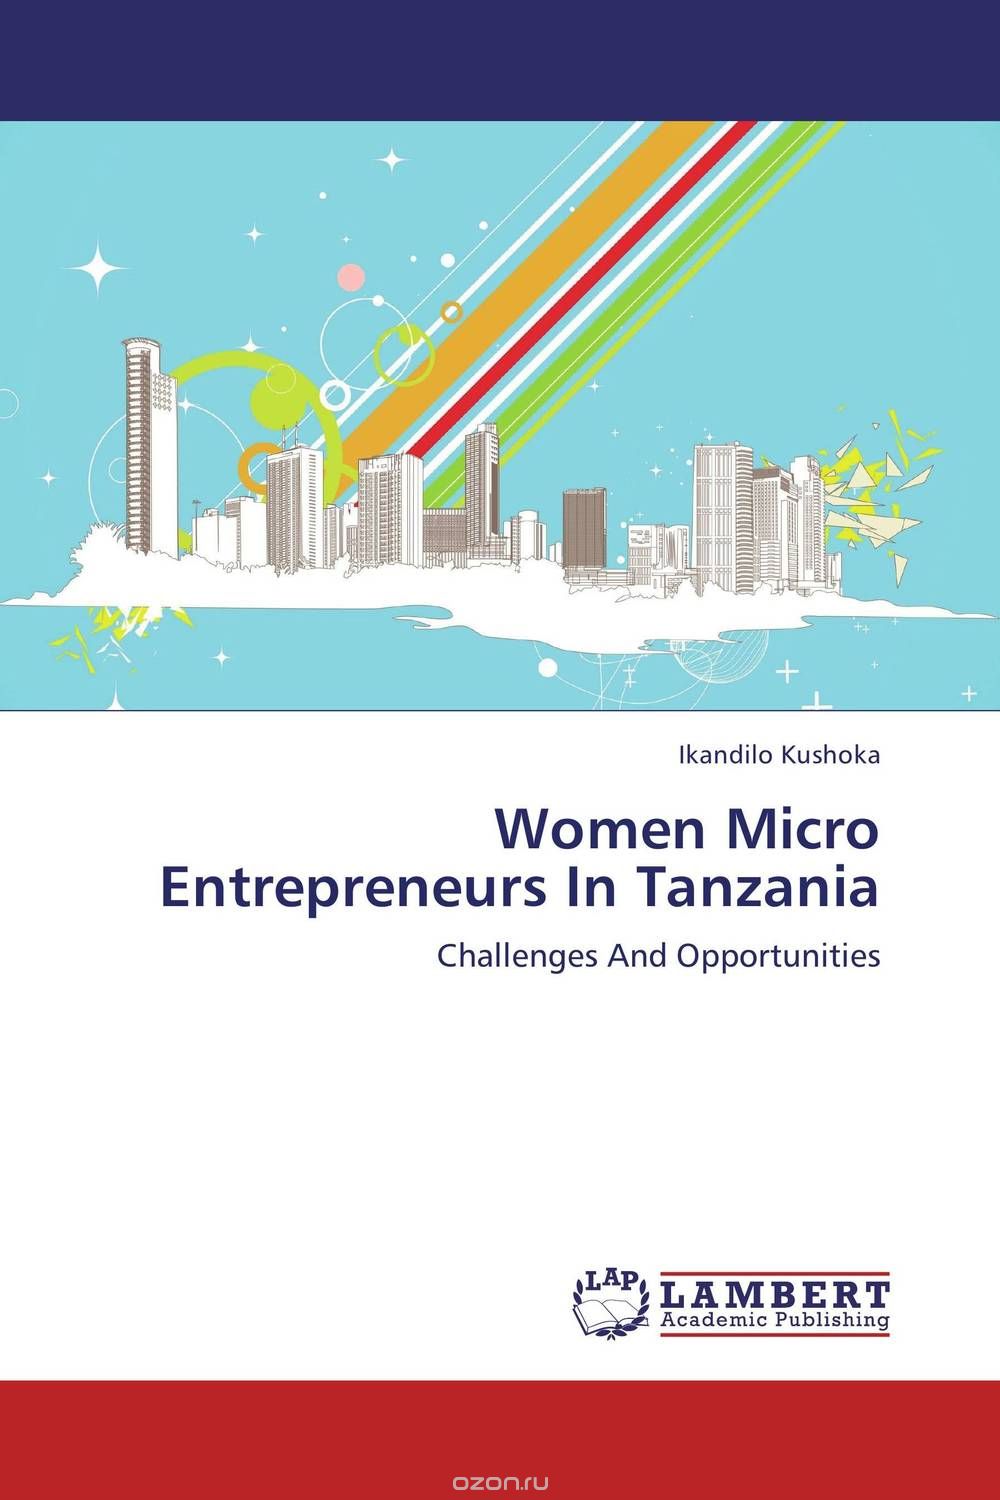 Скачать книгу "Women Micro Entrepreneurs In Tanzania"